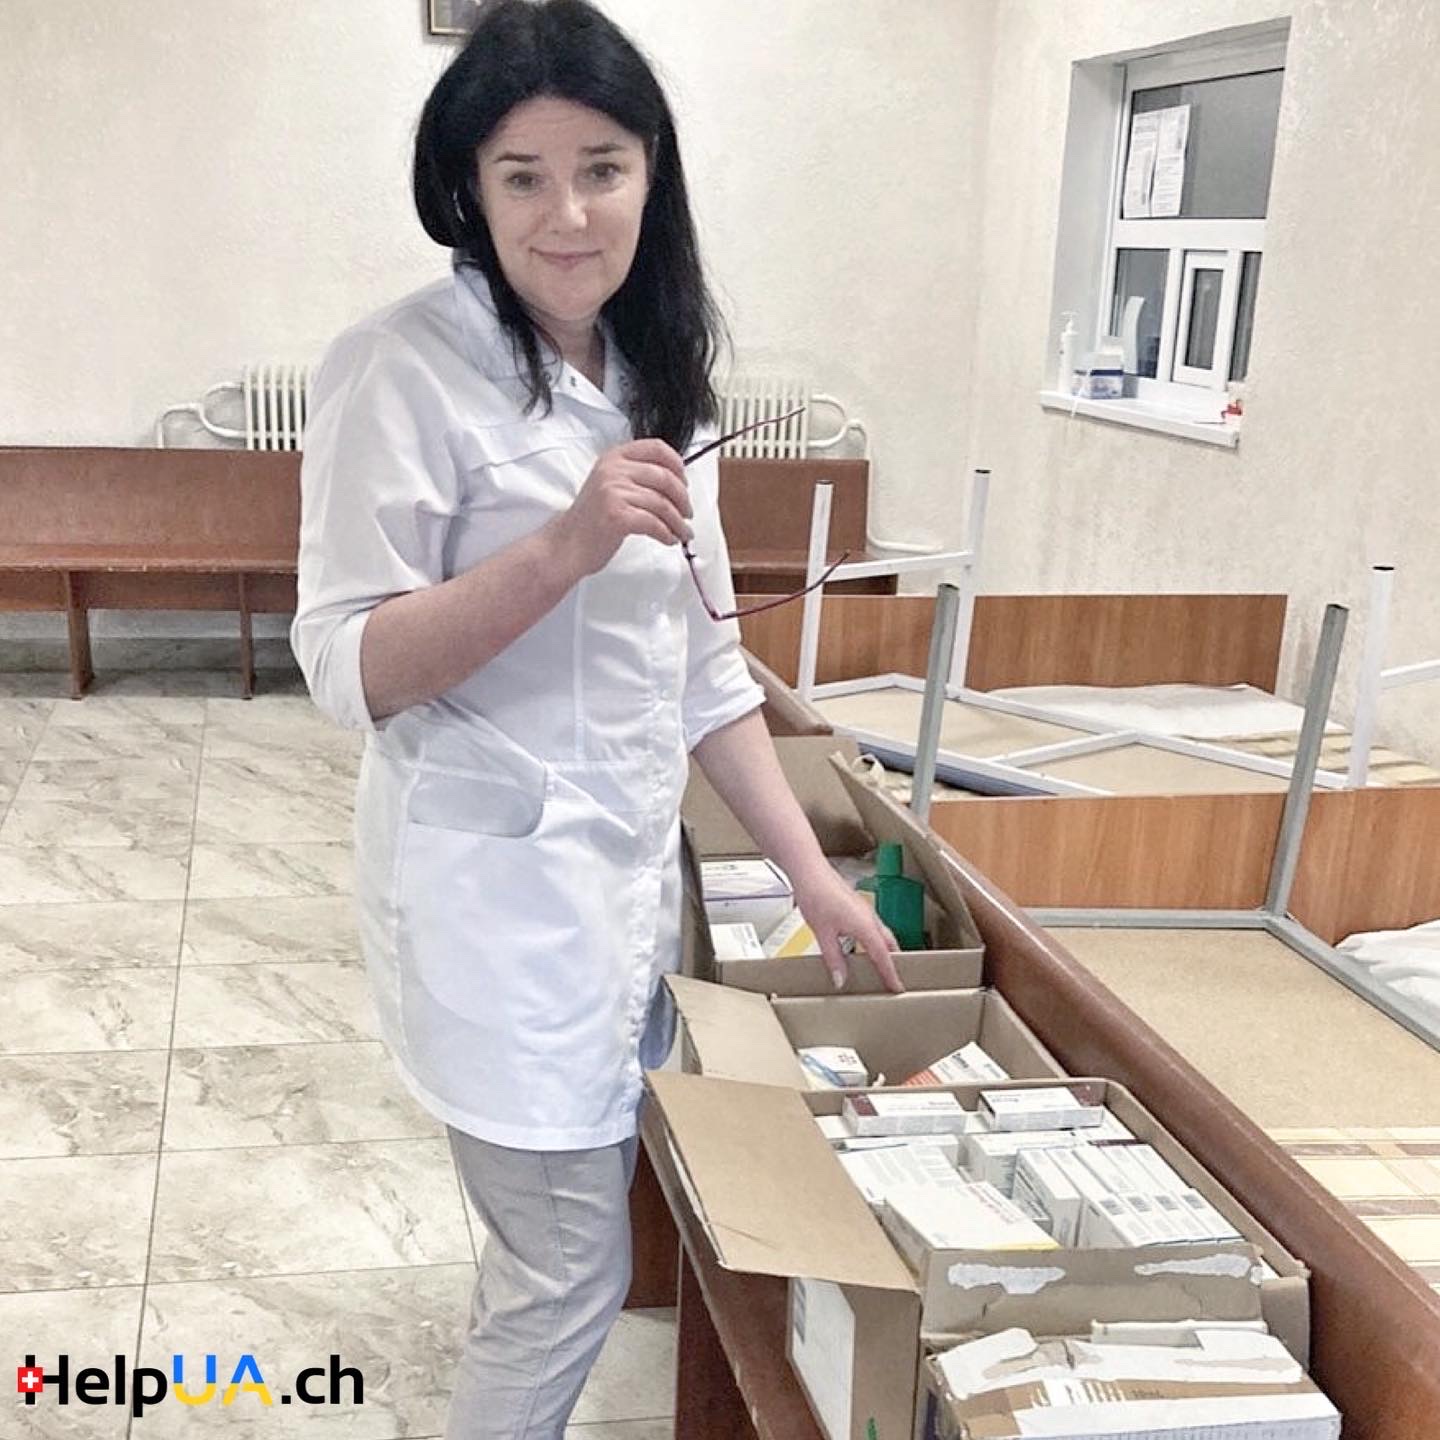 Medication for Borshchahivka village hospital in Bucha region